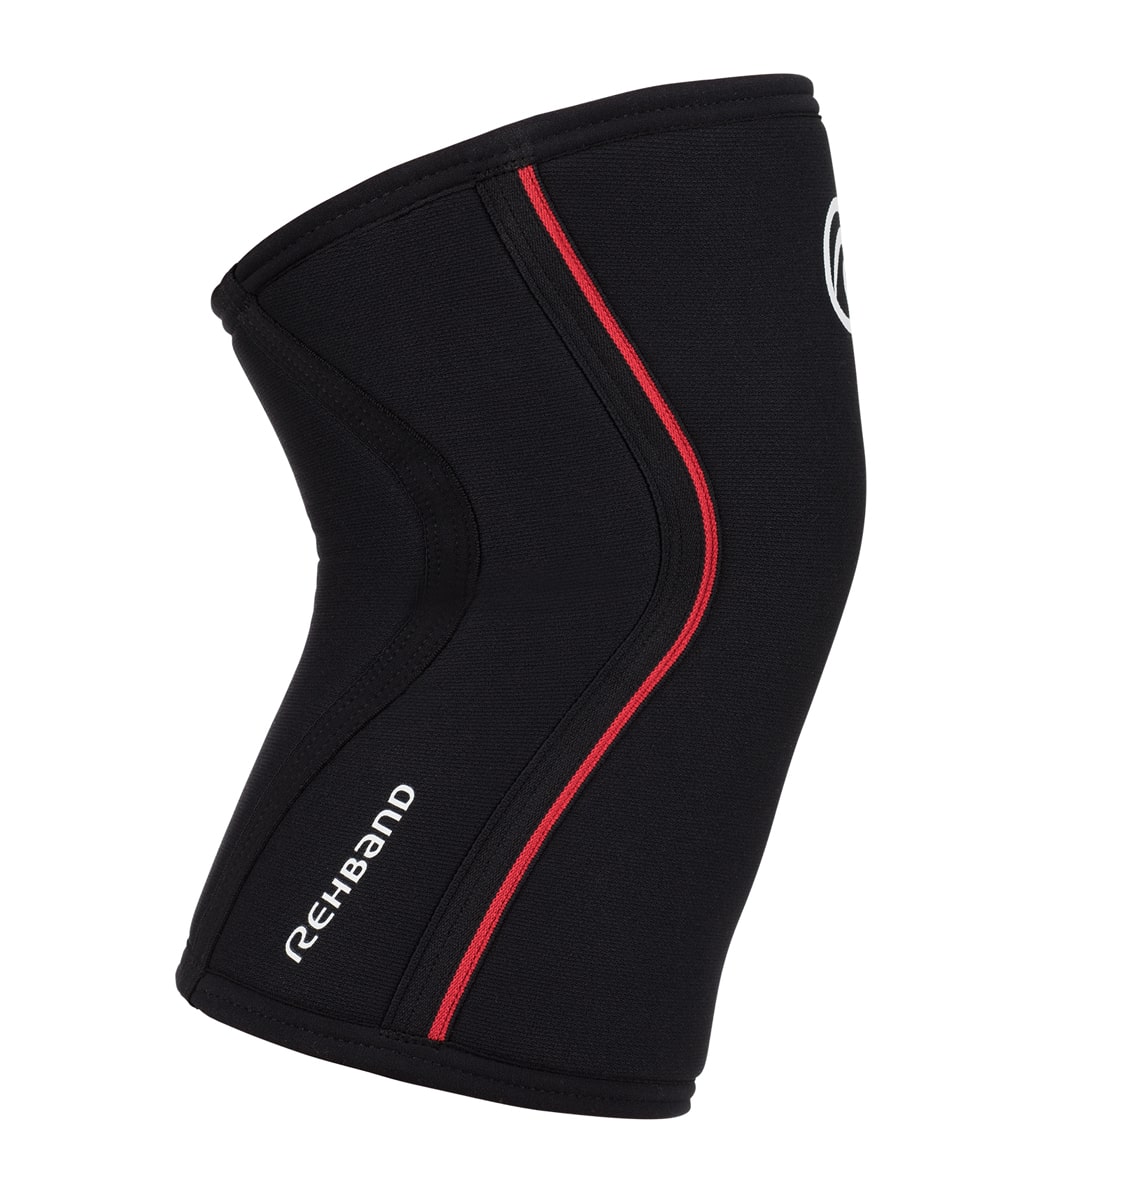 105436-02 - Rehband Rx Knee Sleeve - Black/Red - 7mm - Side